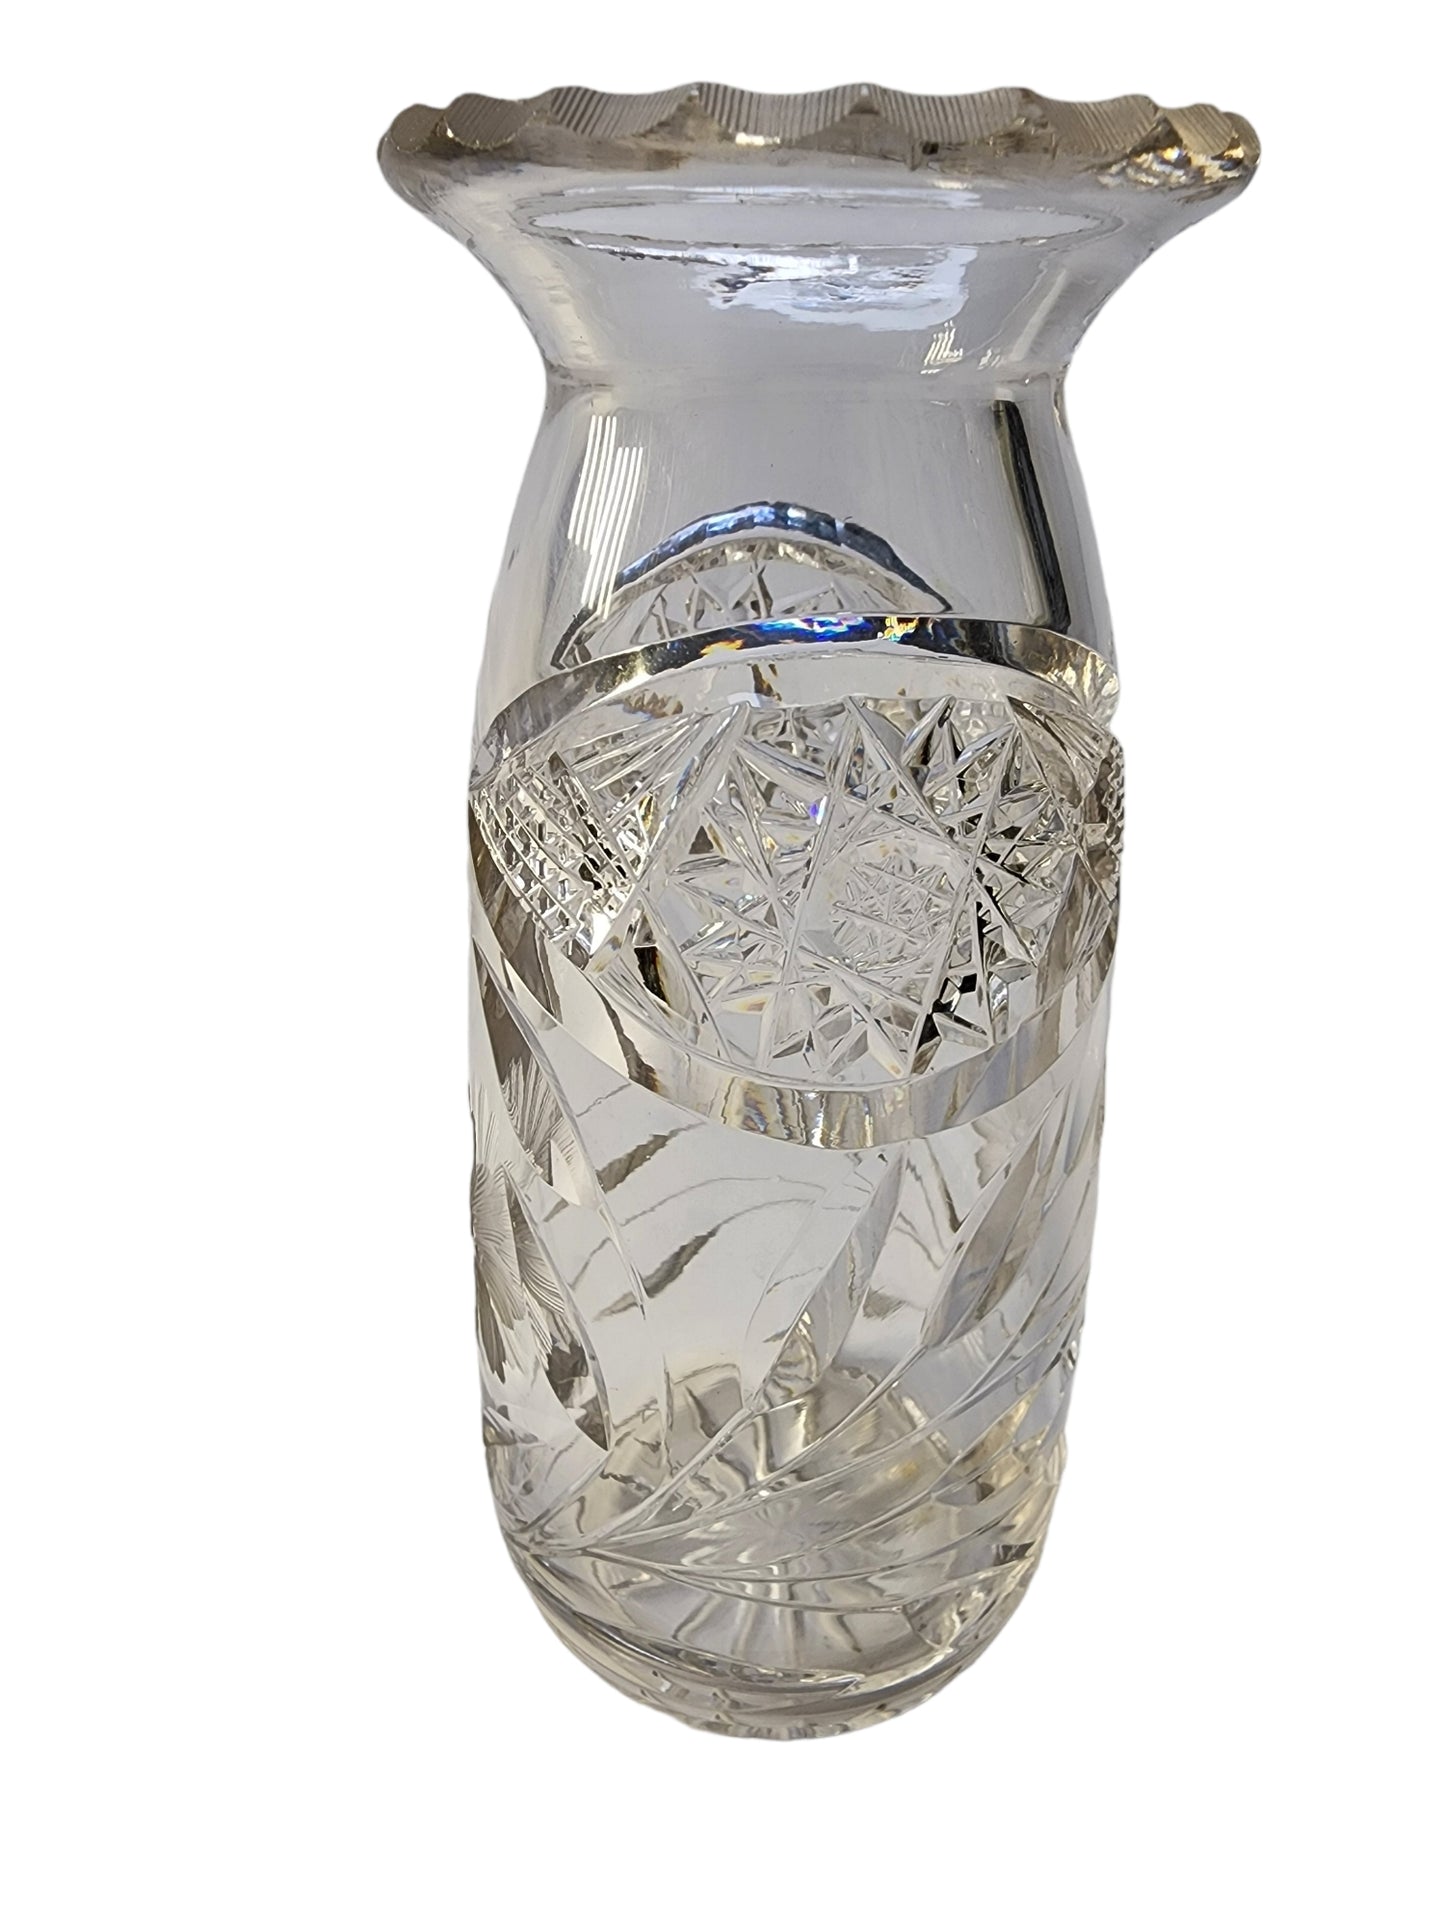 American Brilliant Period Cut Glass vase floral